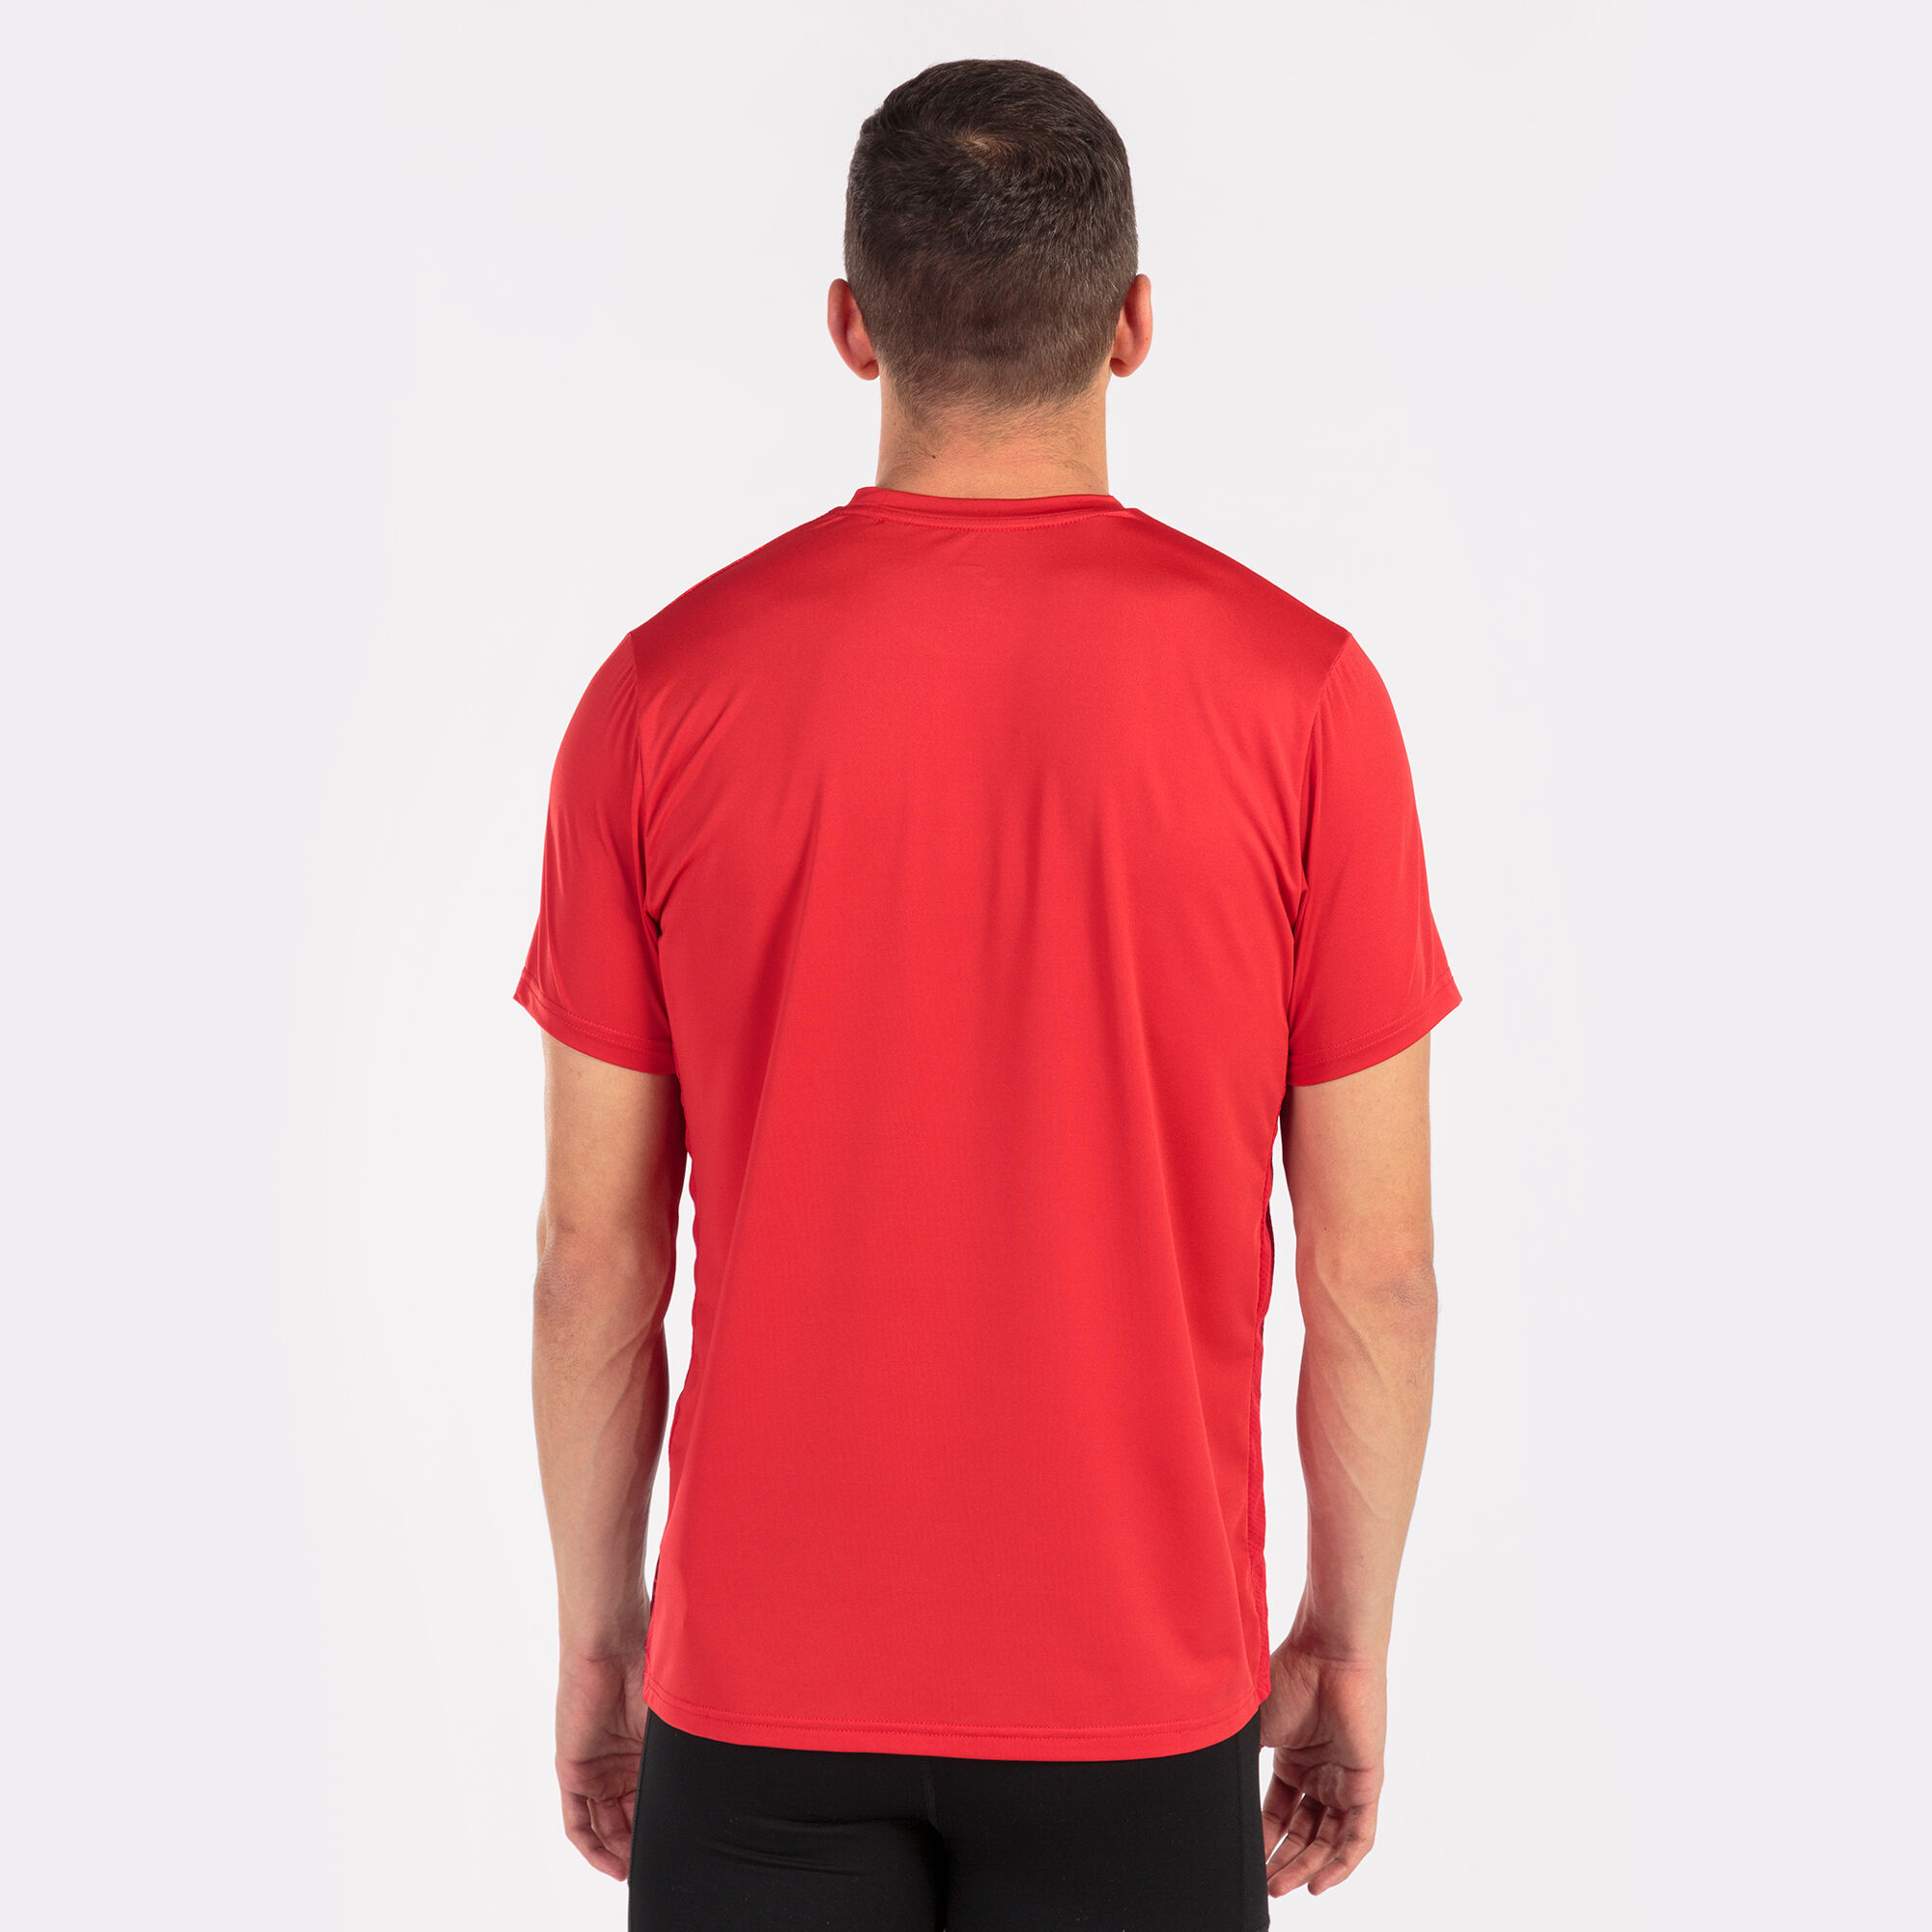 Camiseta manga corta hombre Elite VIII rojo